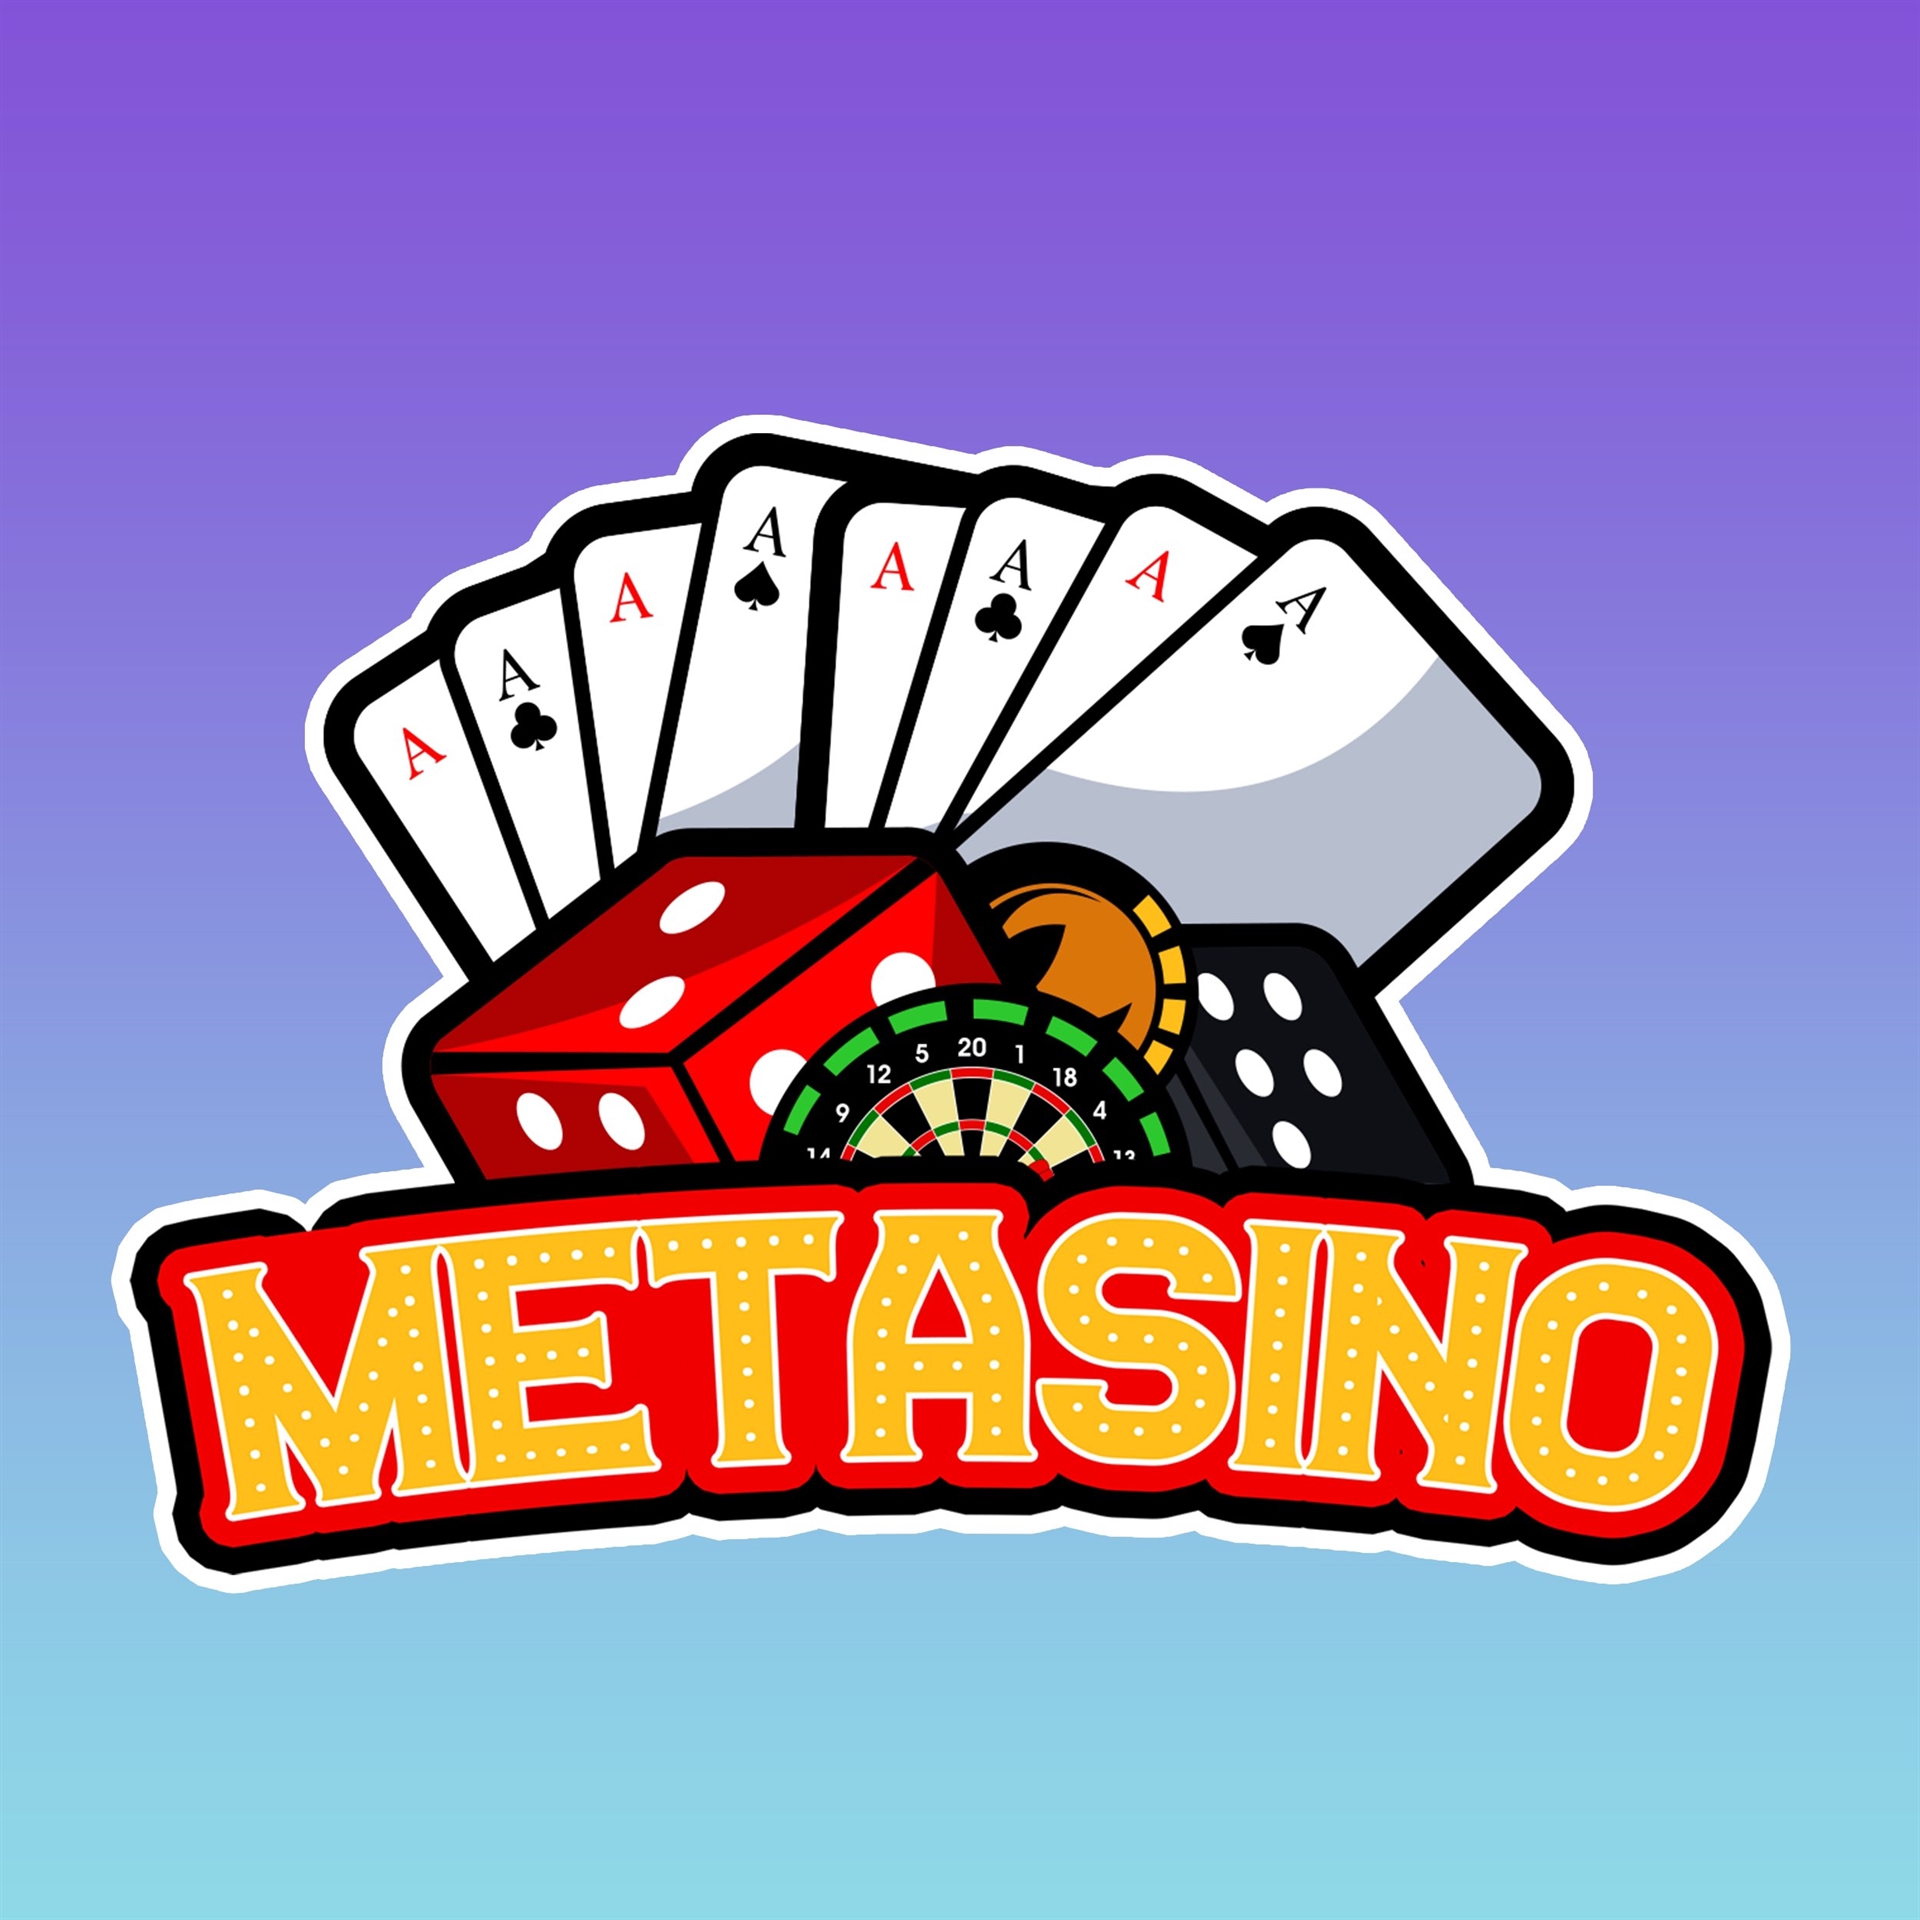 Metasino logo